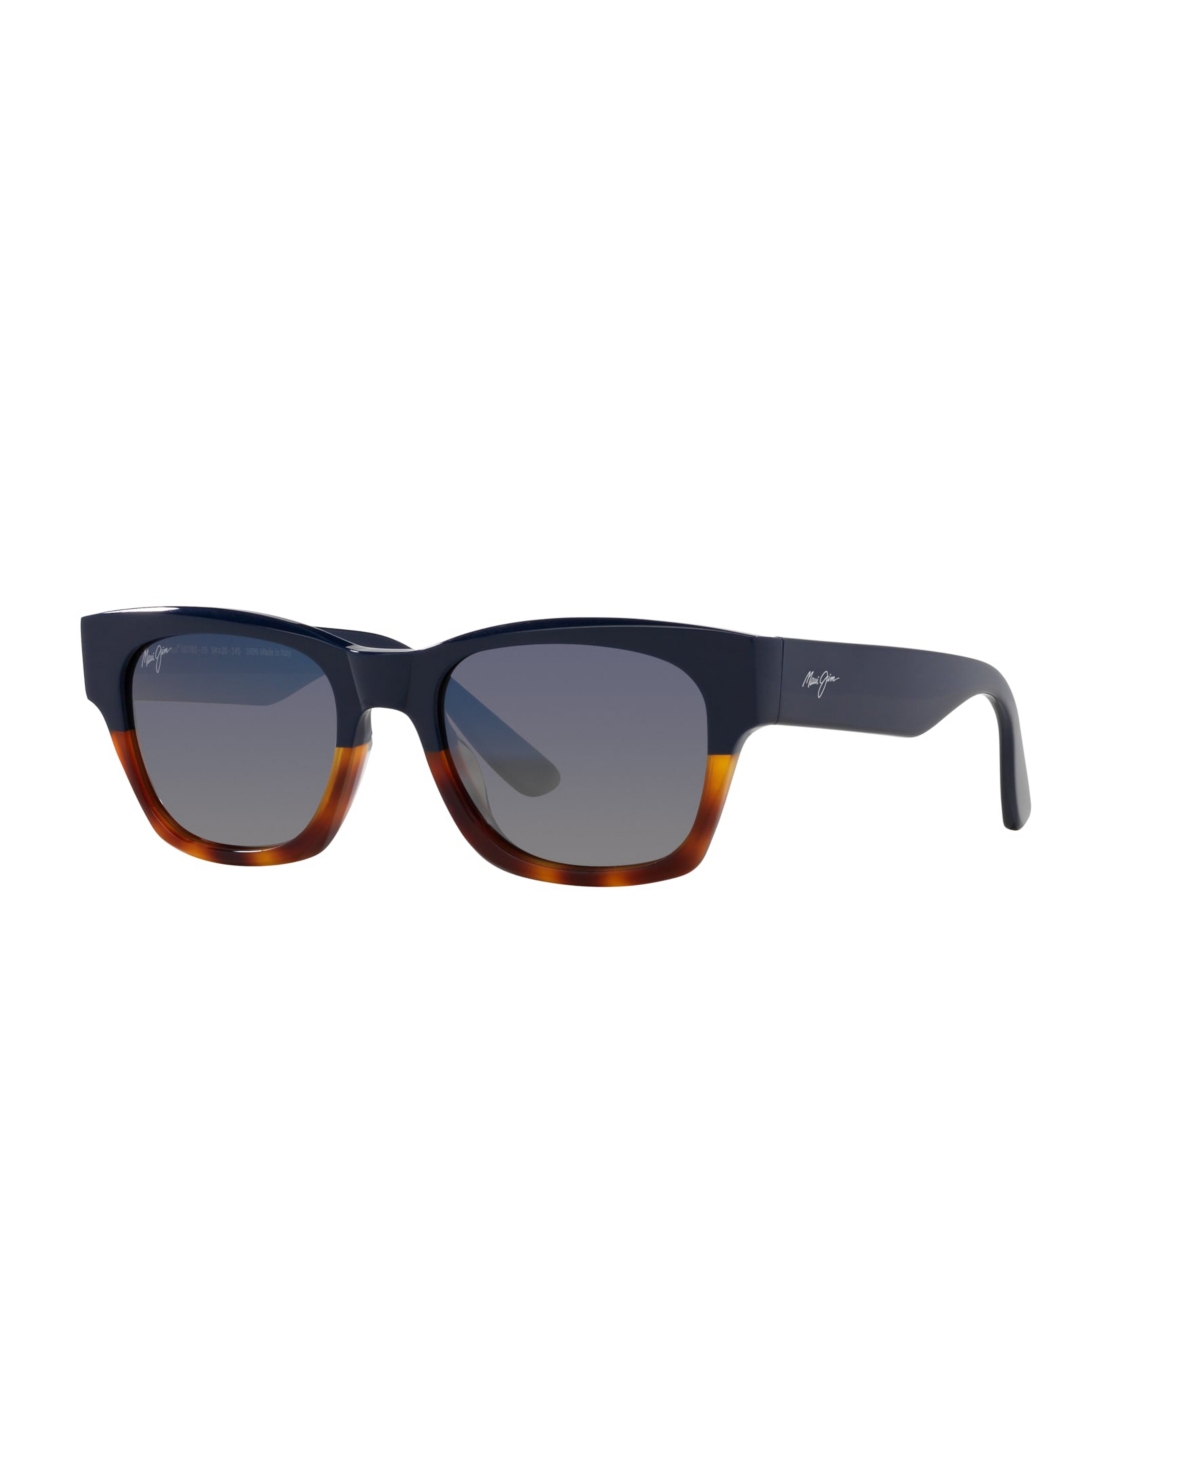 Unisex Polarized Sunglasses, Valley Isle Mj000734 - Blue Brown